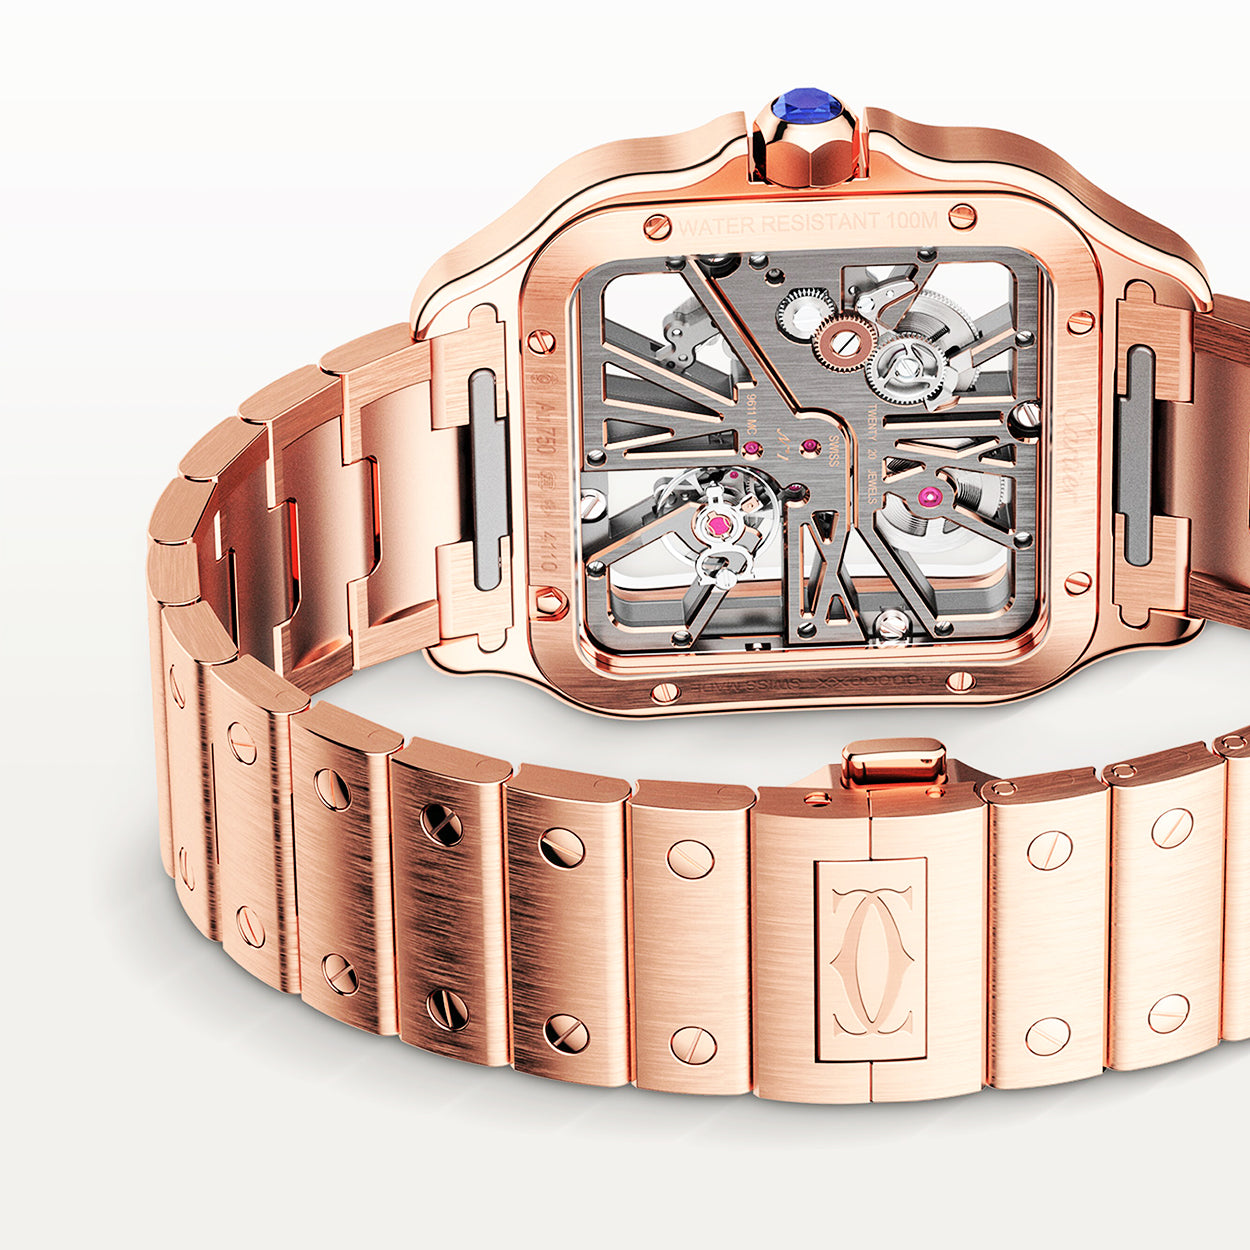 Santos de Cartier Large 18ct Rose Gold Men's Skeleton Dial Watch